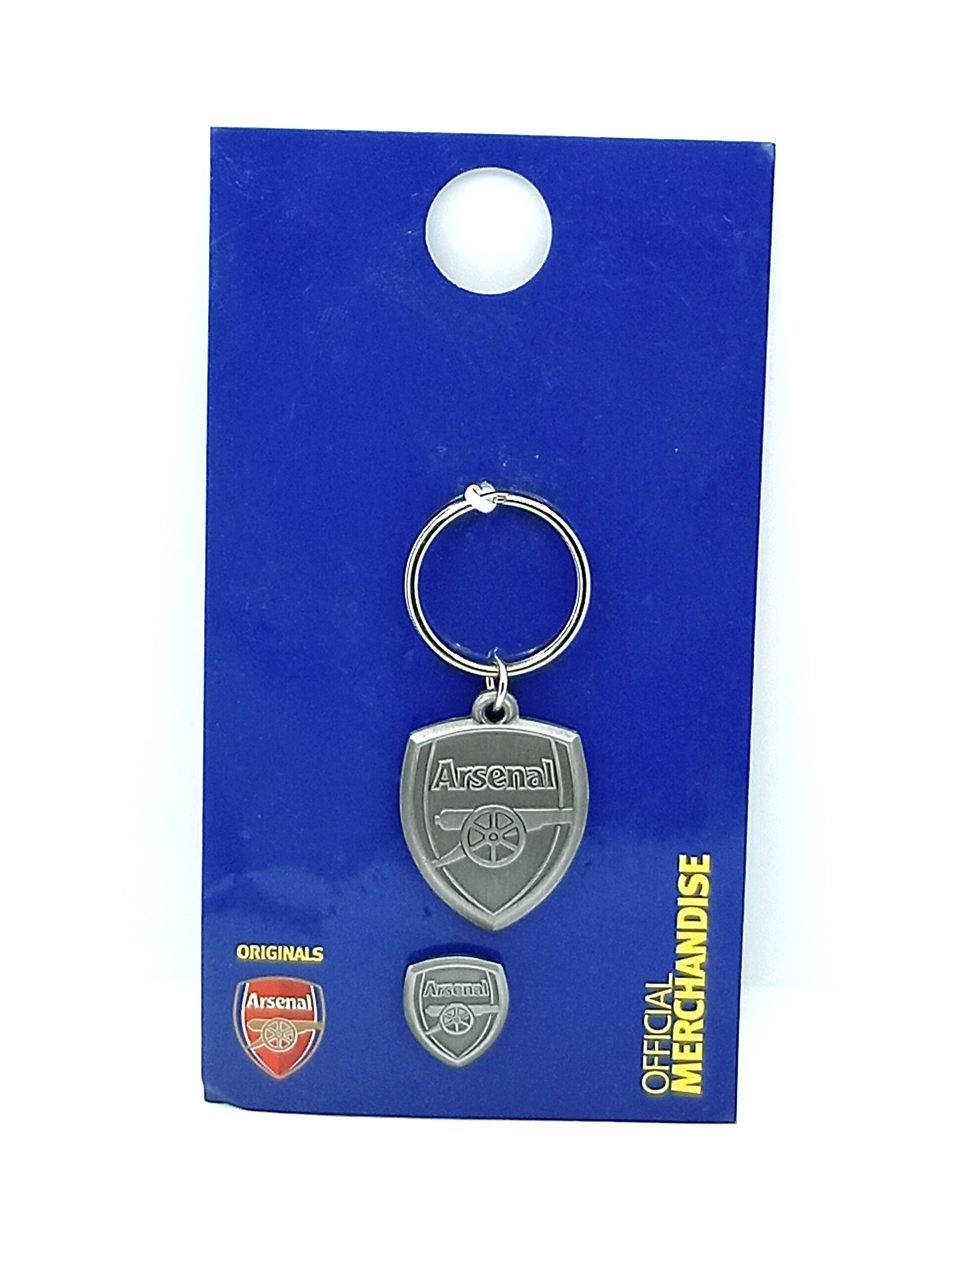 Arsenal medal and pin